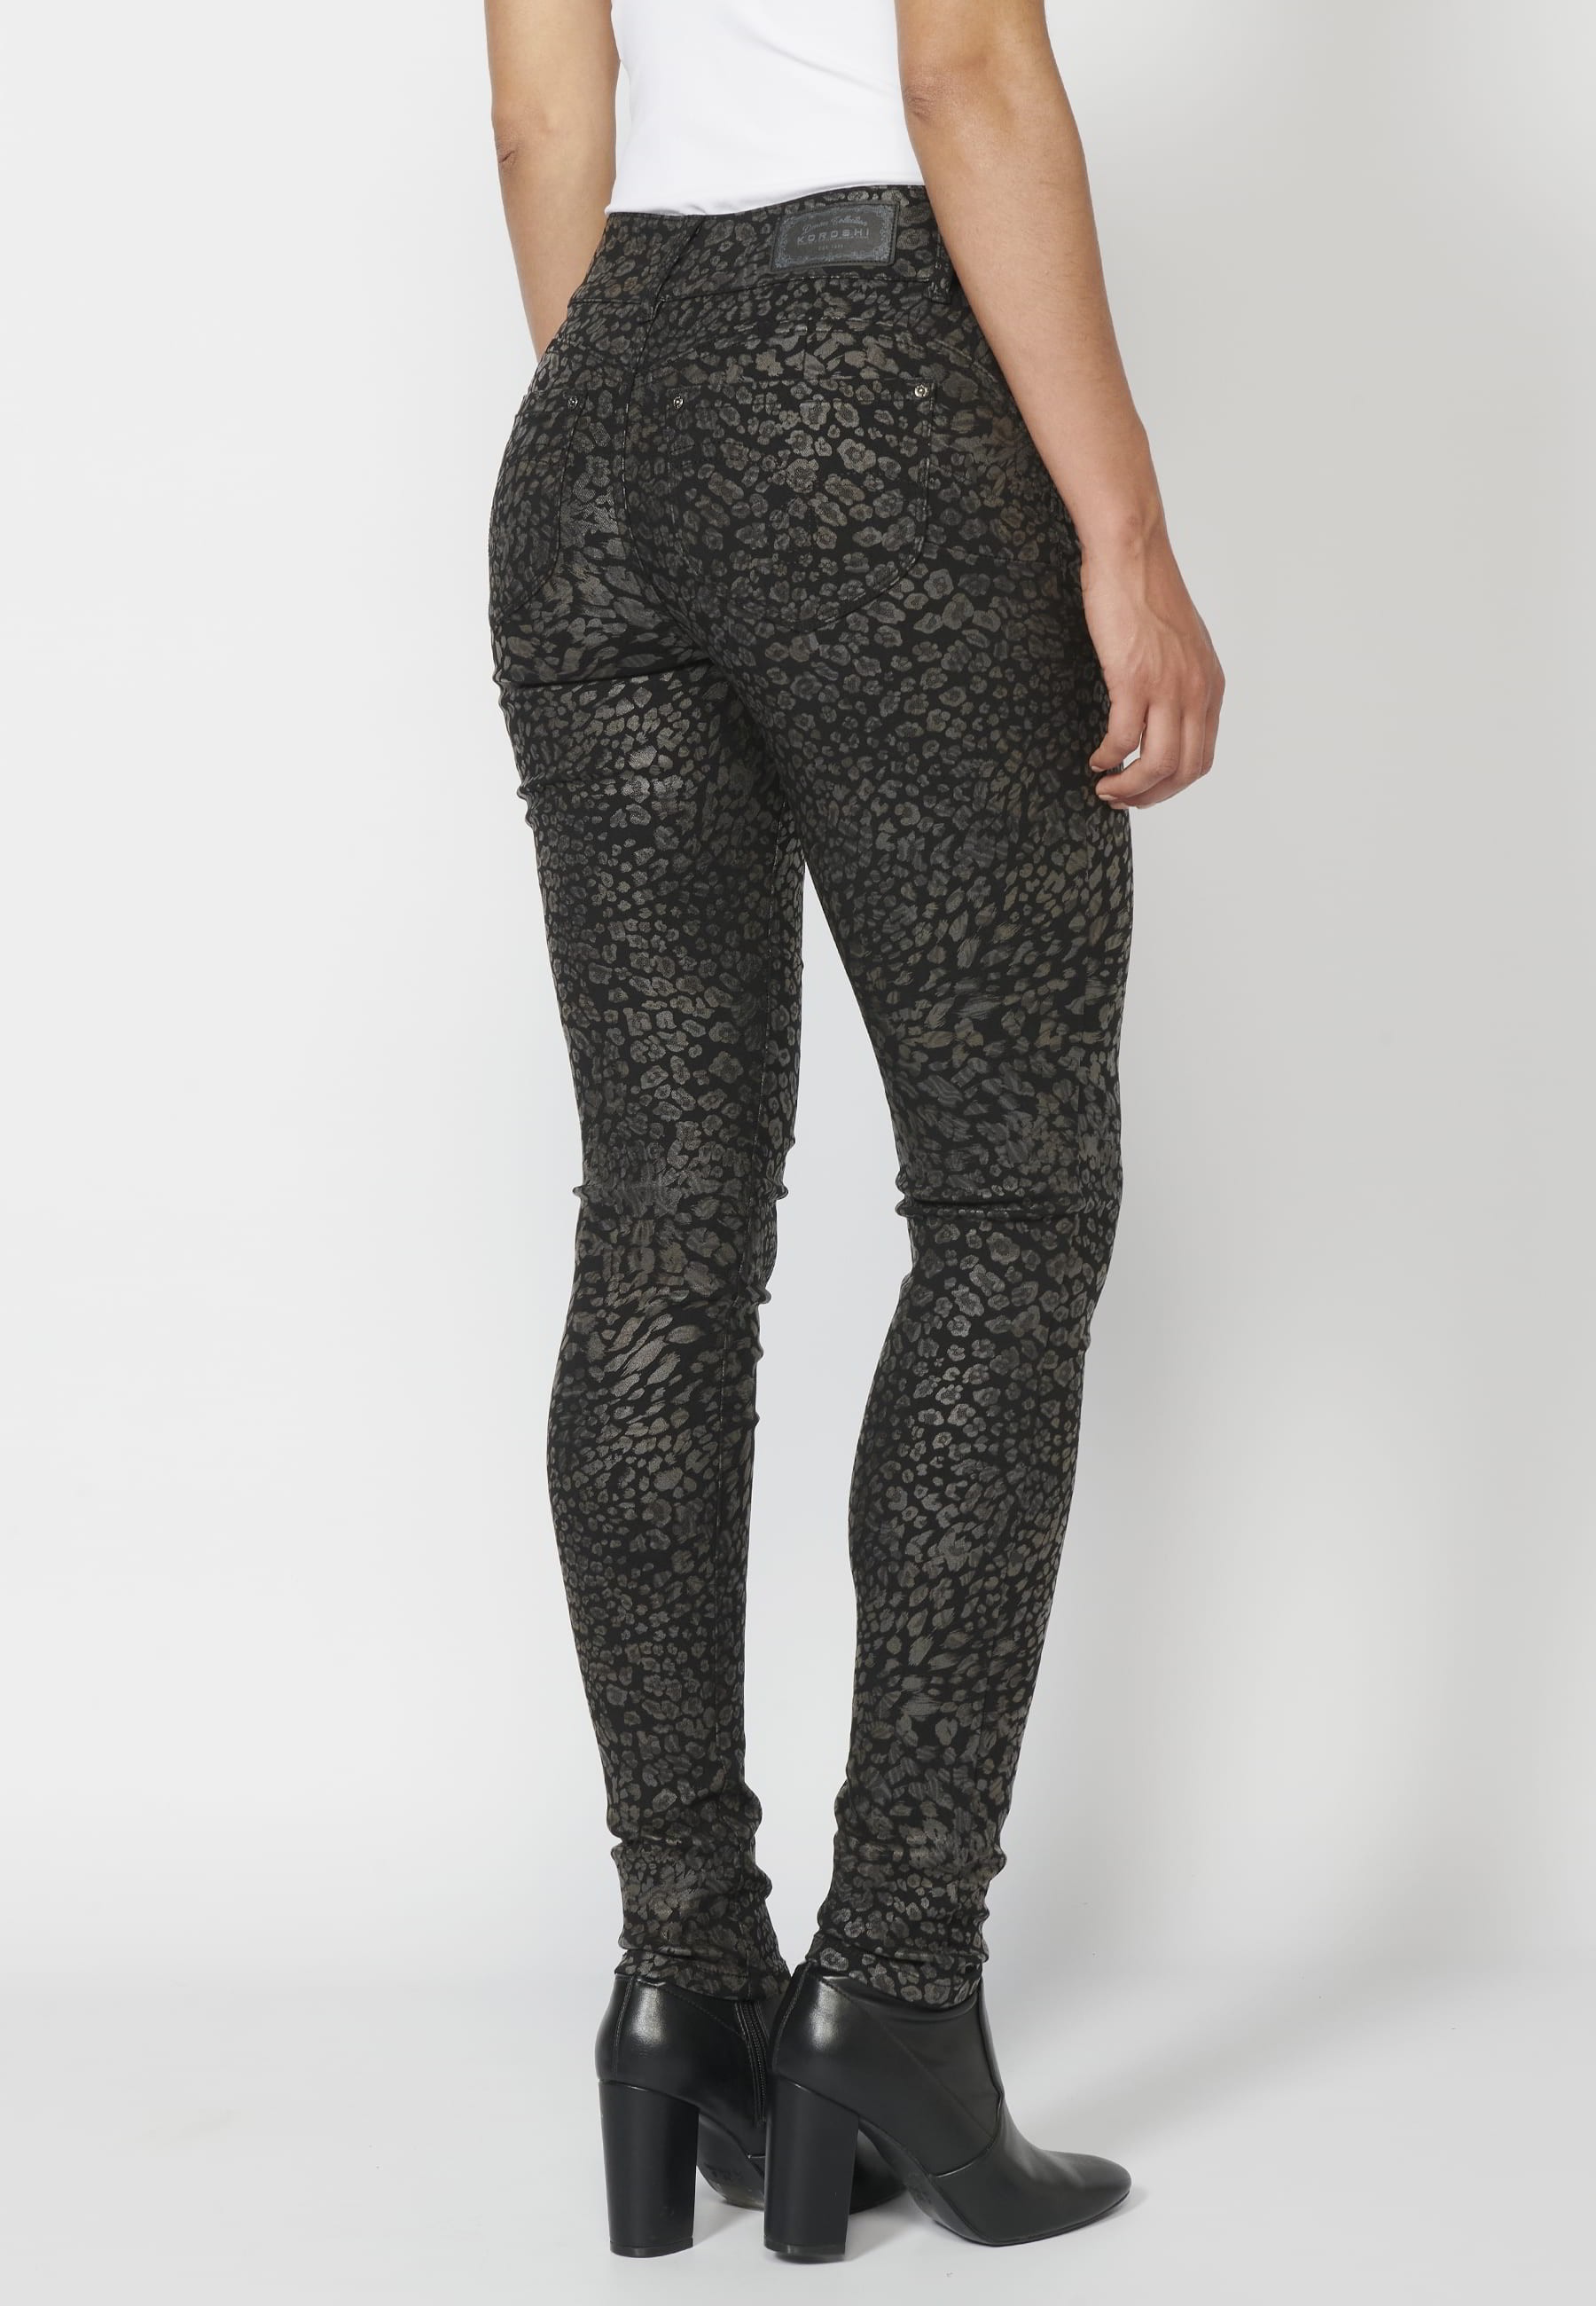 Black animal print slim fit long pants for Woman 6